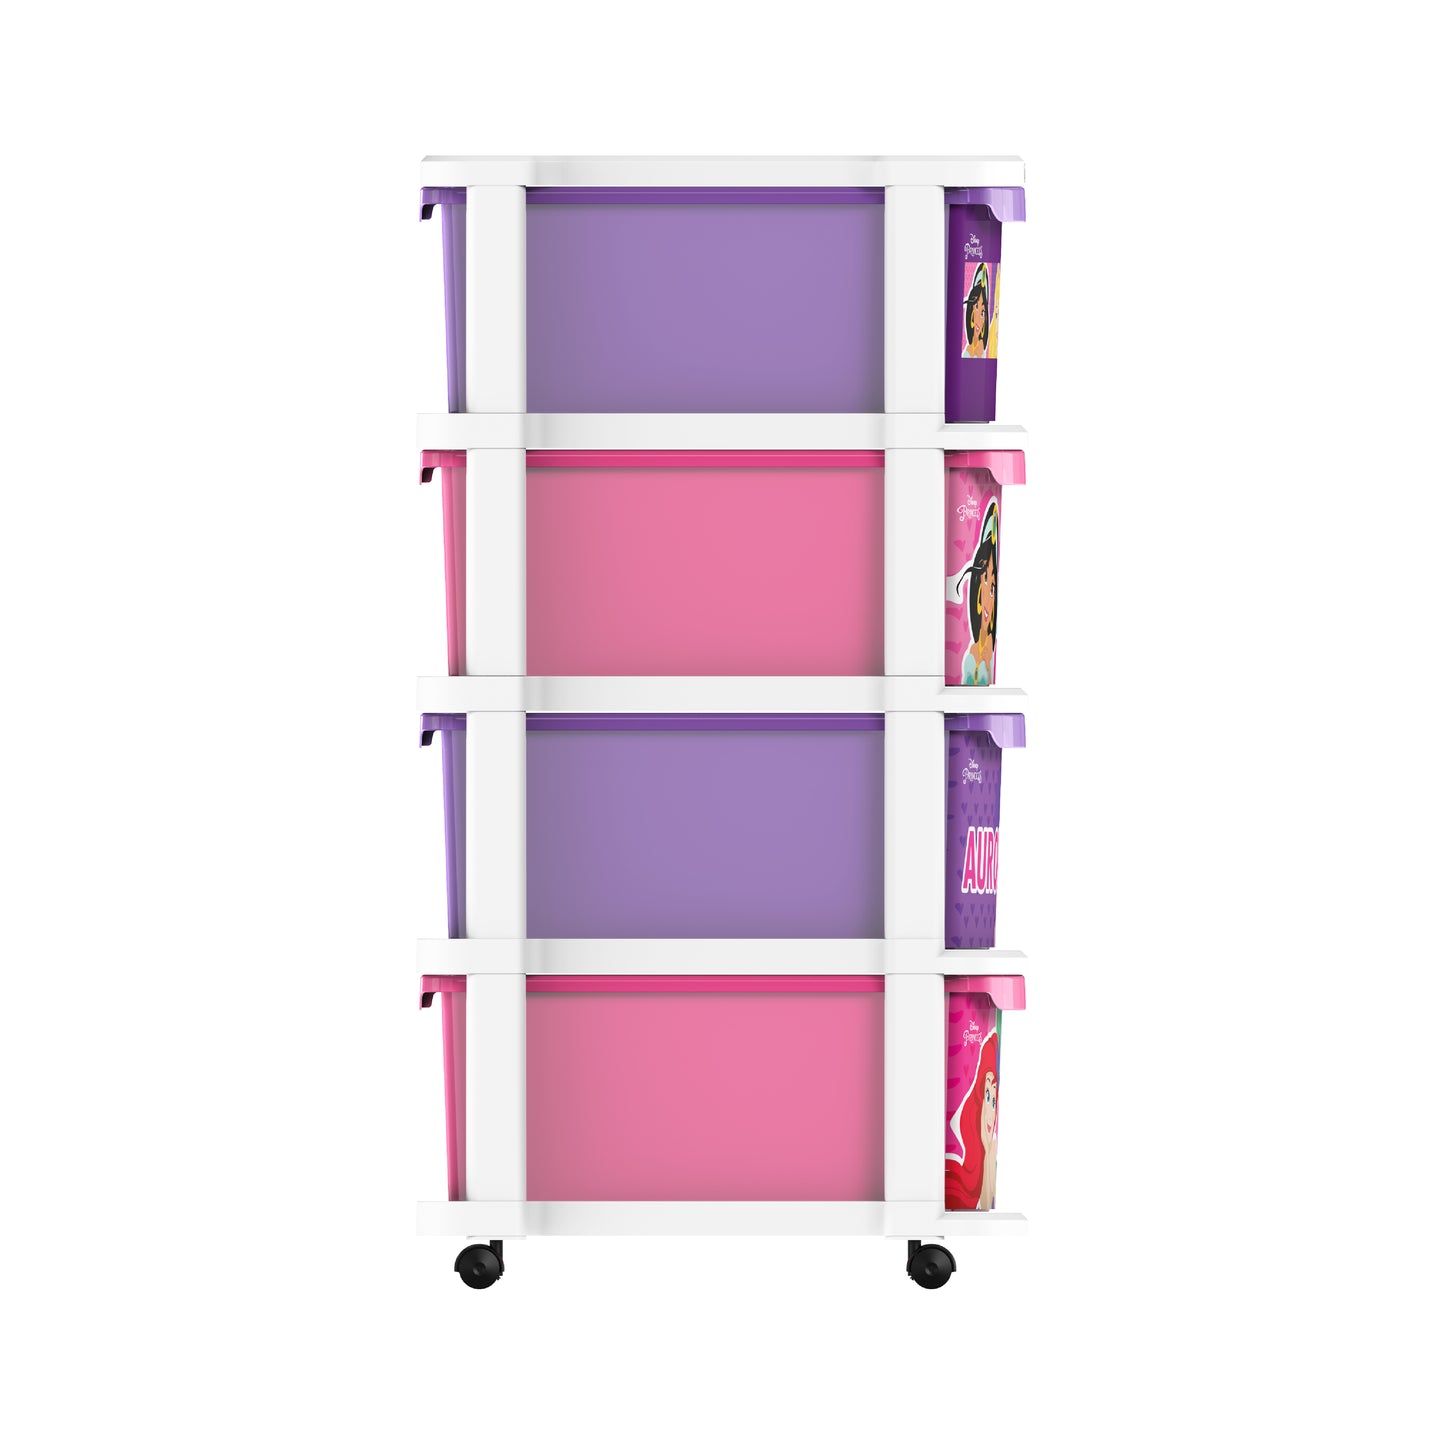 Cosmoplast Disney Princess Multipurpose Storage Cabinet 4